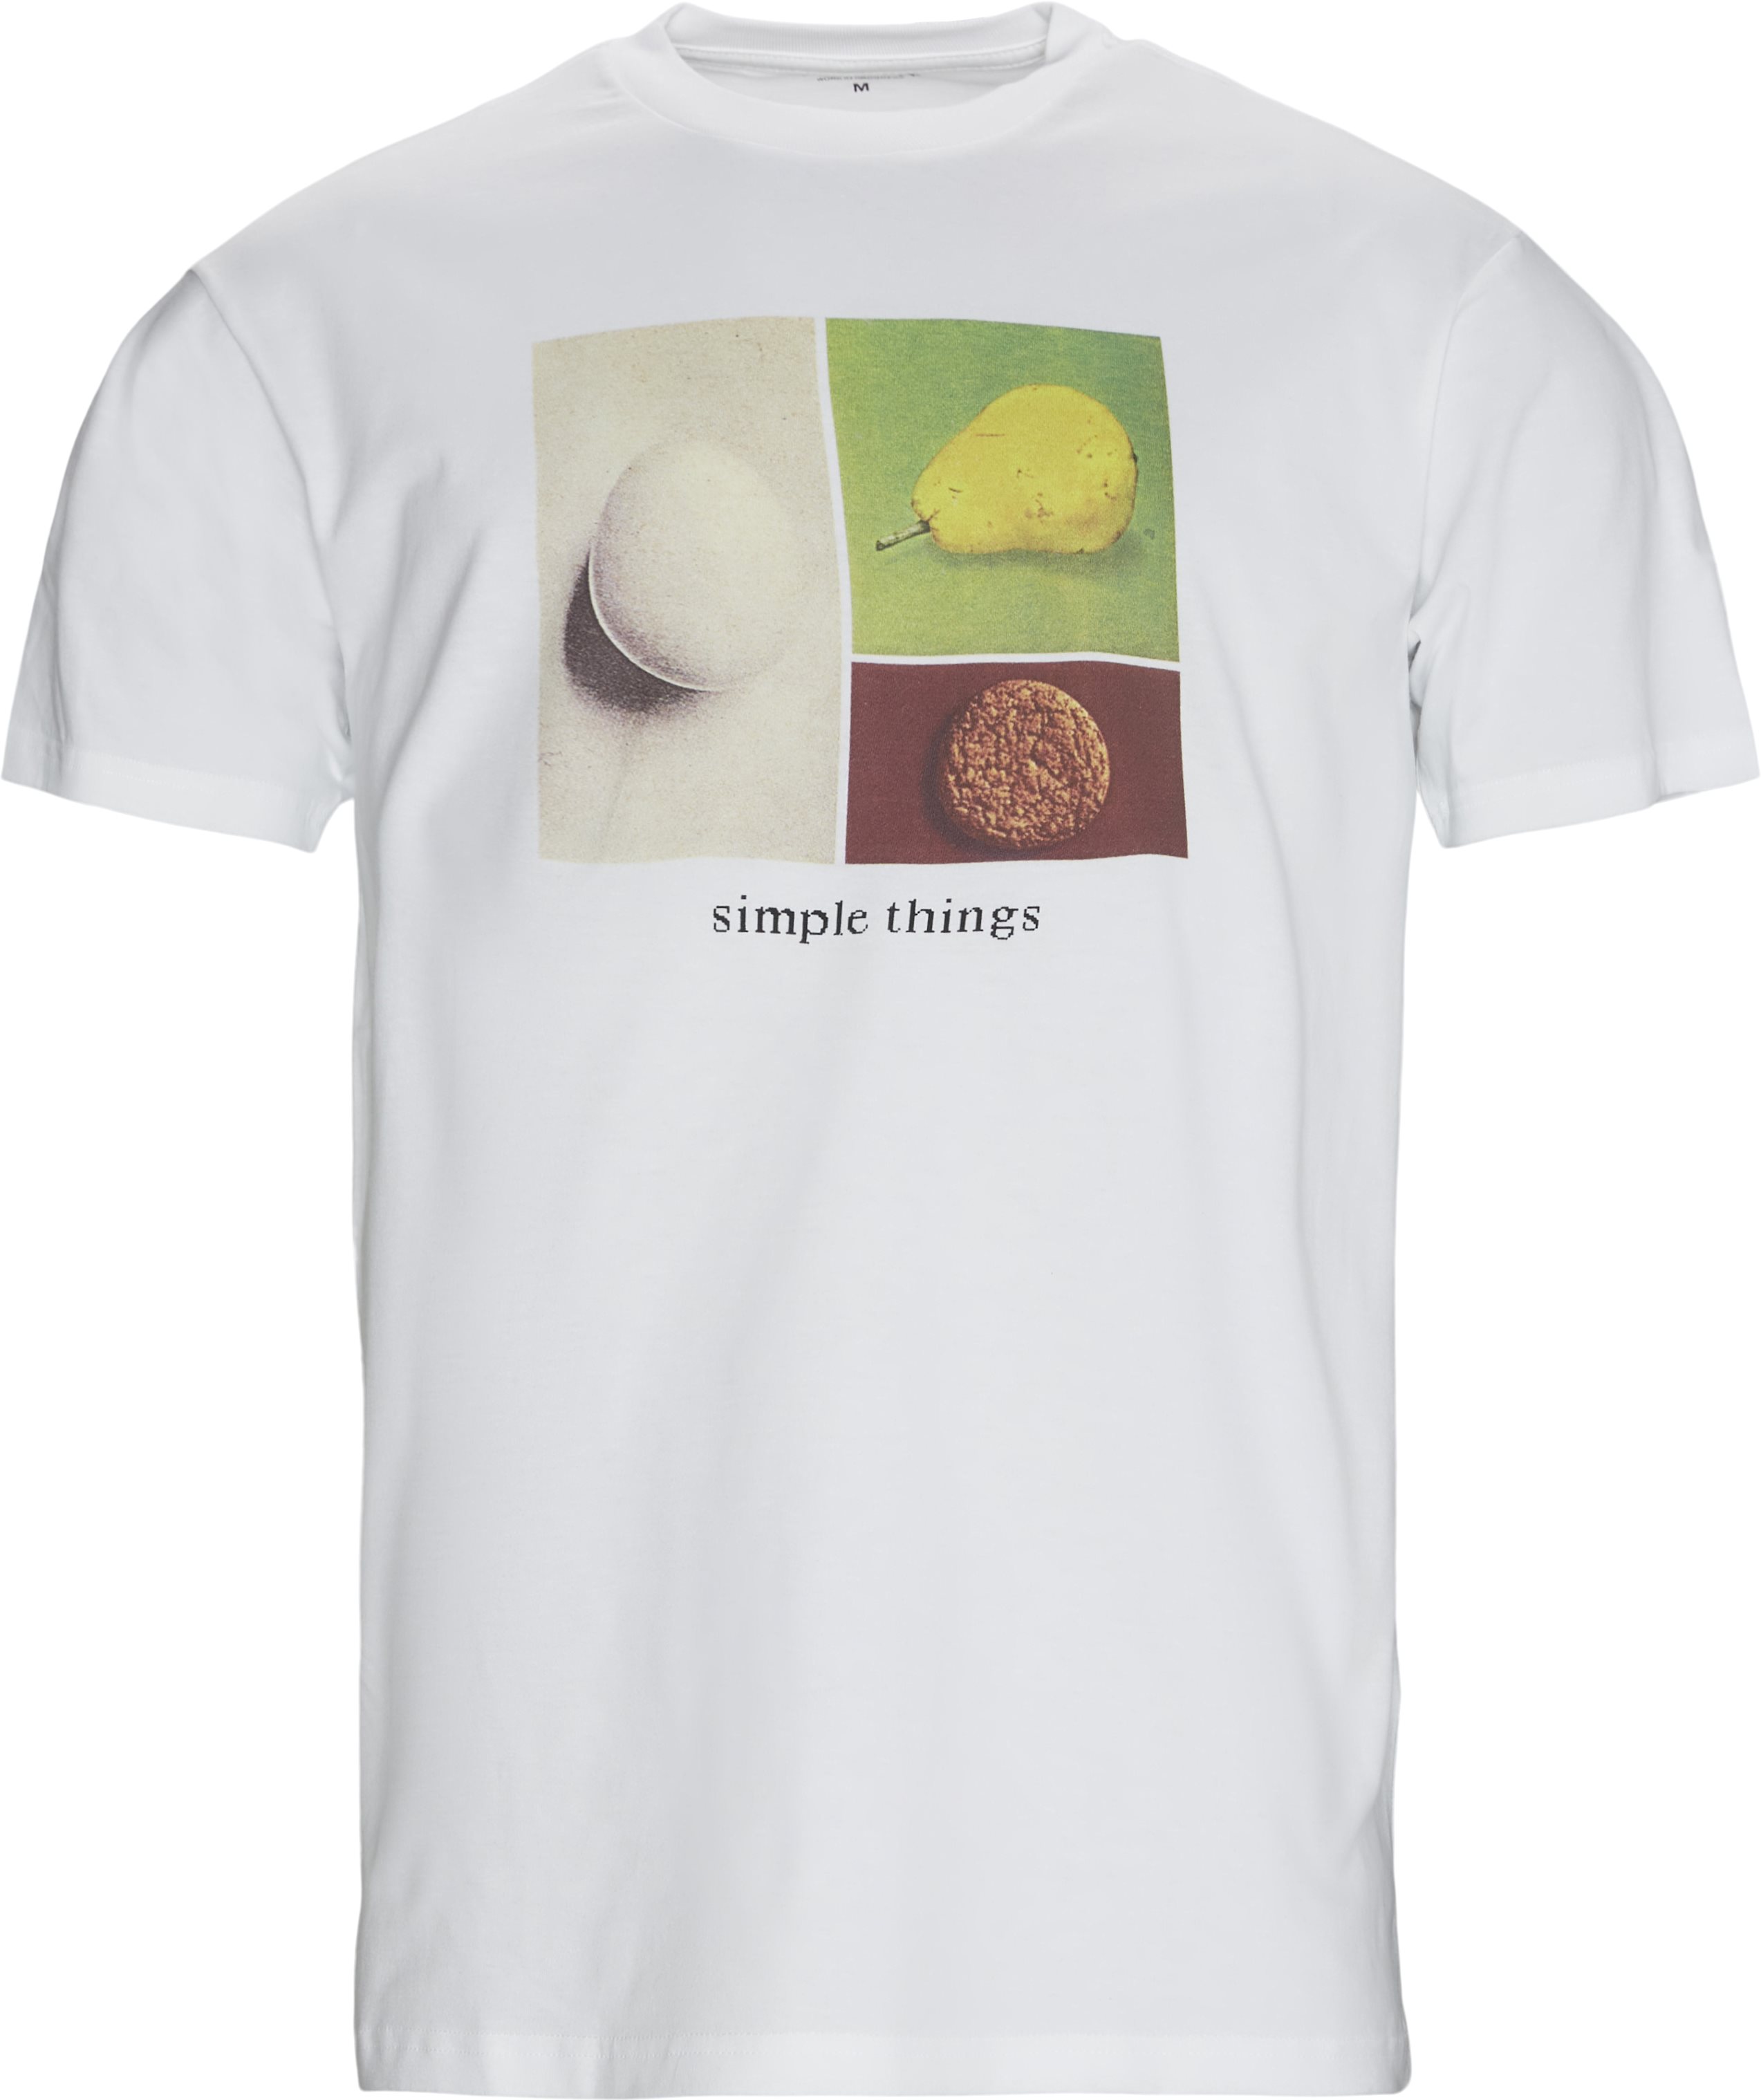 Carhartt WIP T-shirts S/S SIMPLE THINGS I029935 Vit